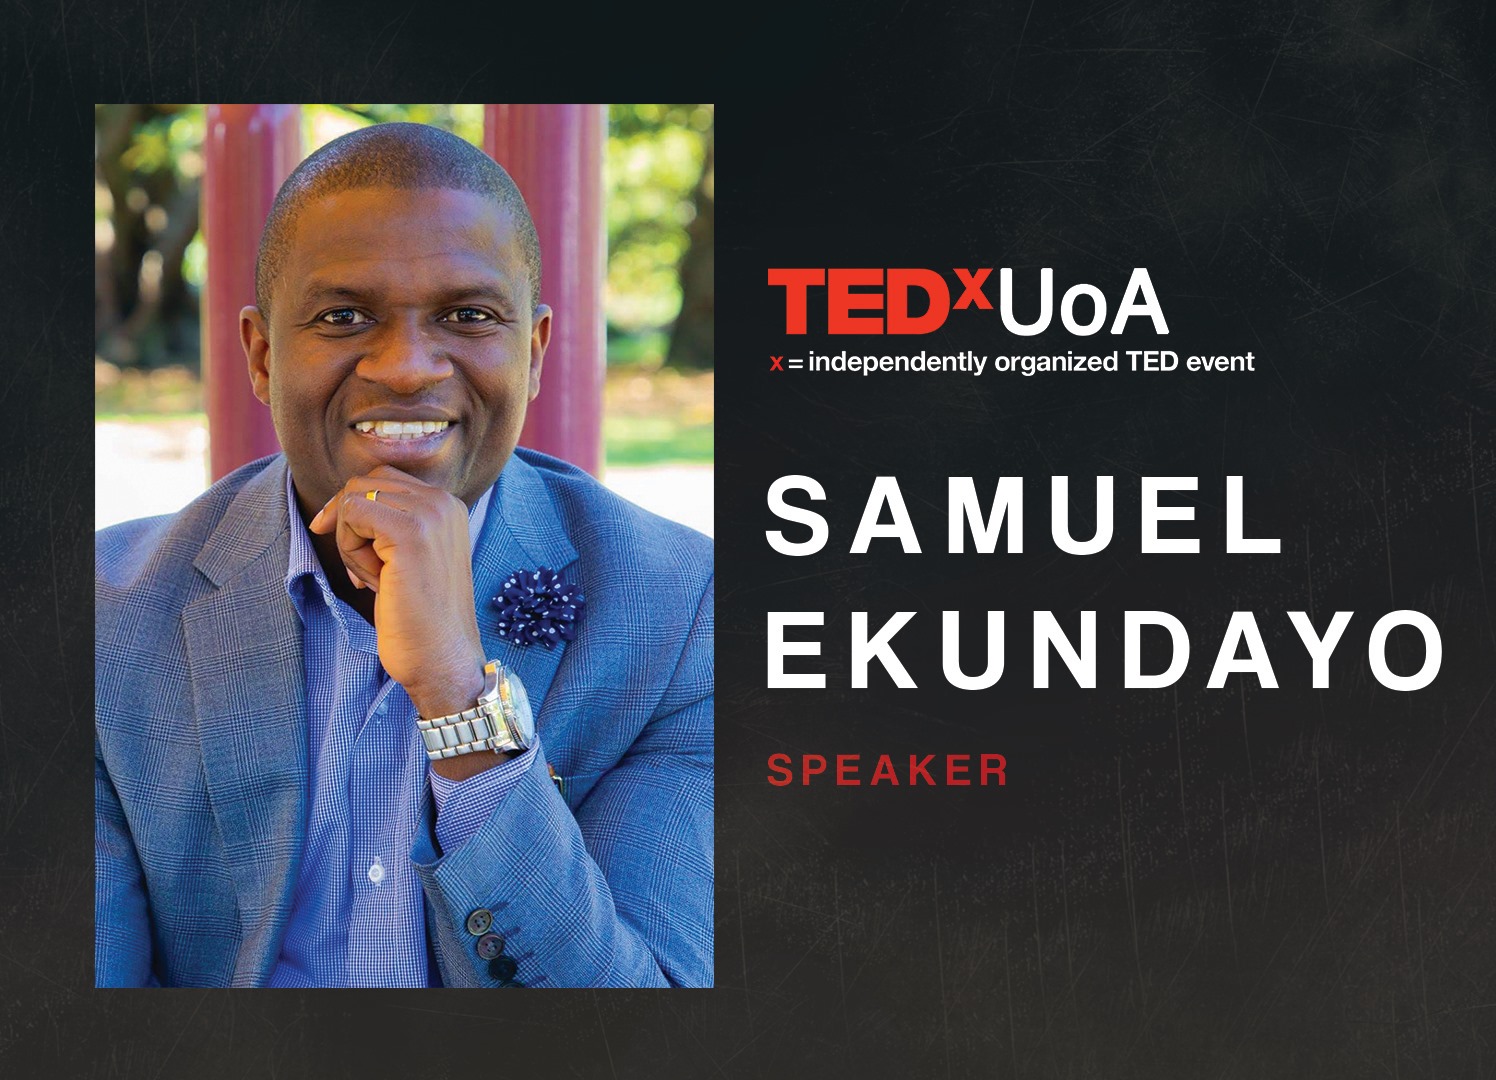 Dr. Samuel Ekundayo